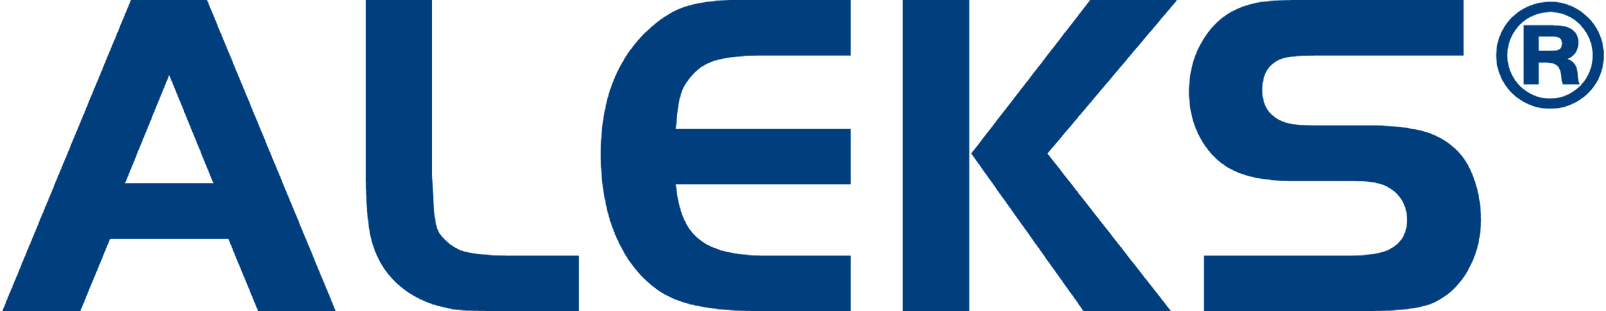 Aleks logo